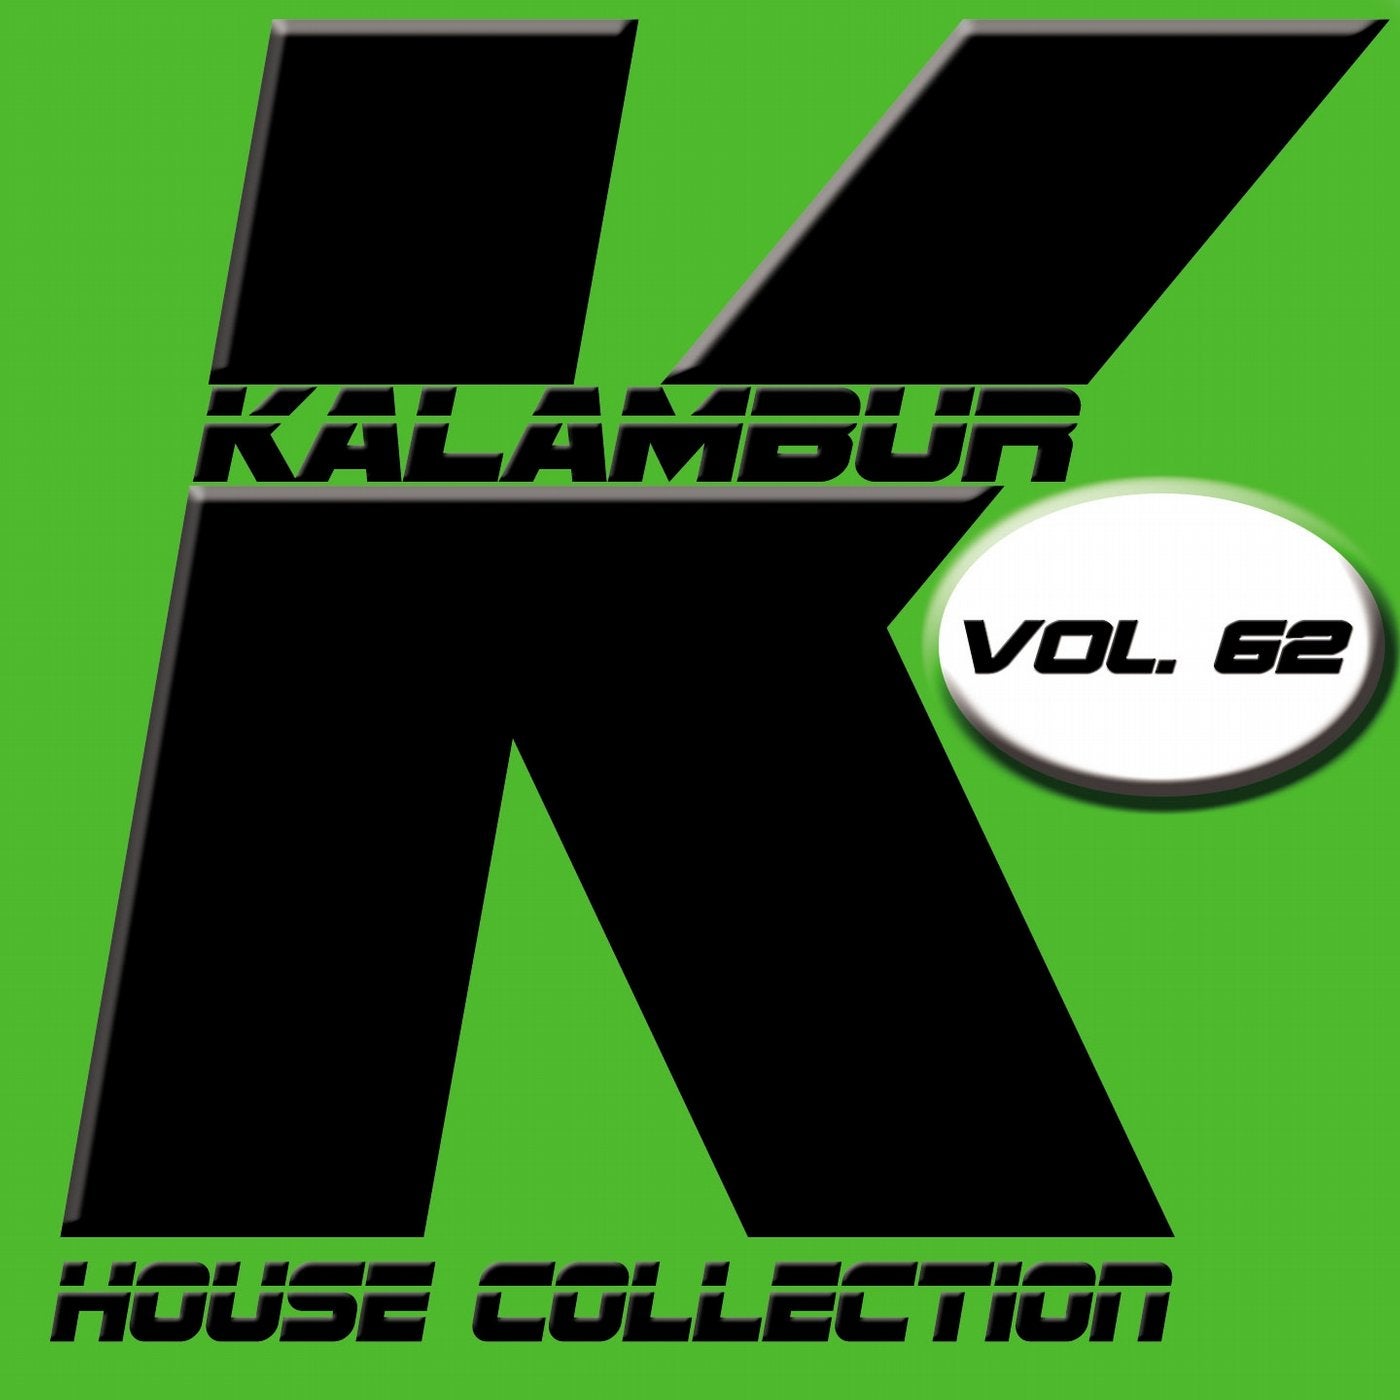 Kalambur House Collection Vol. 62